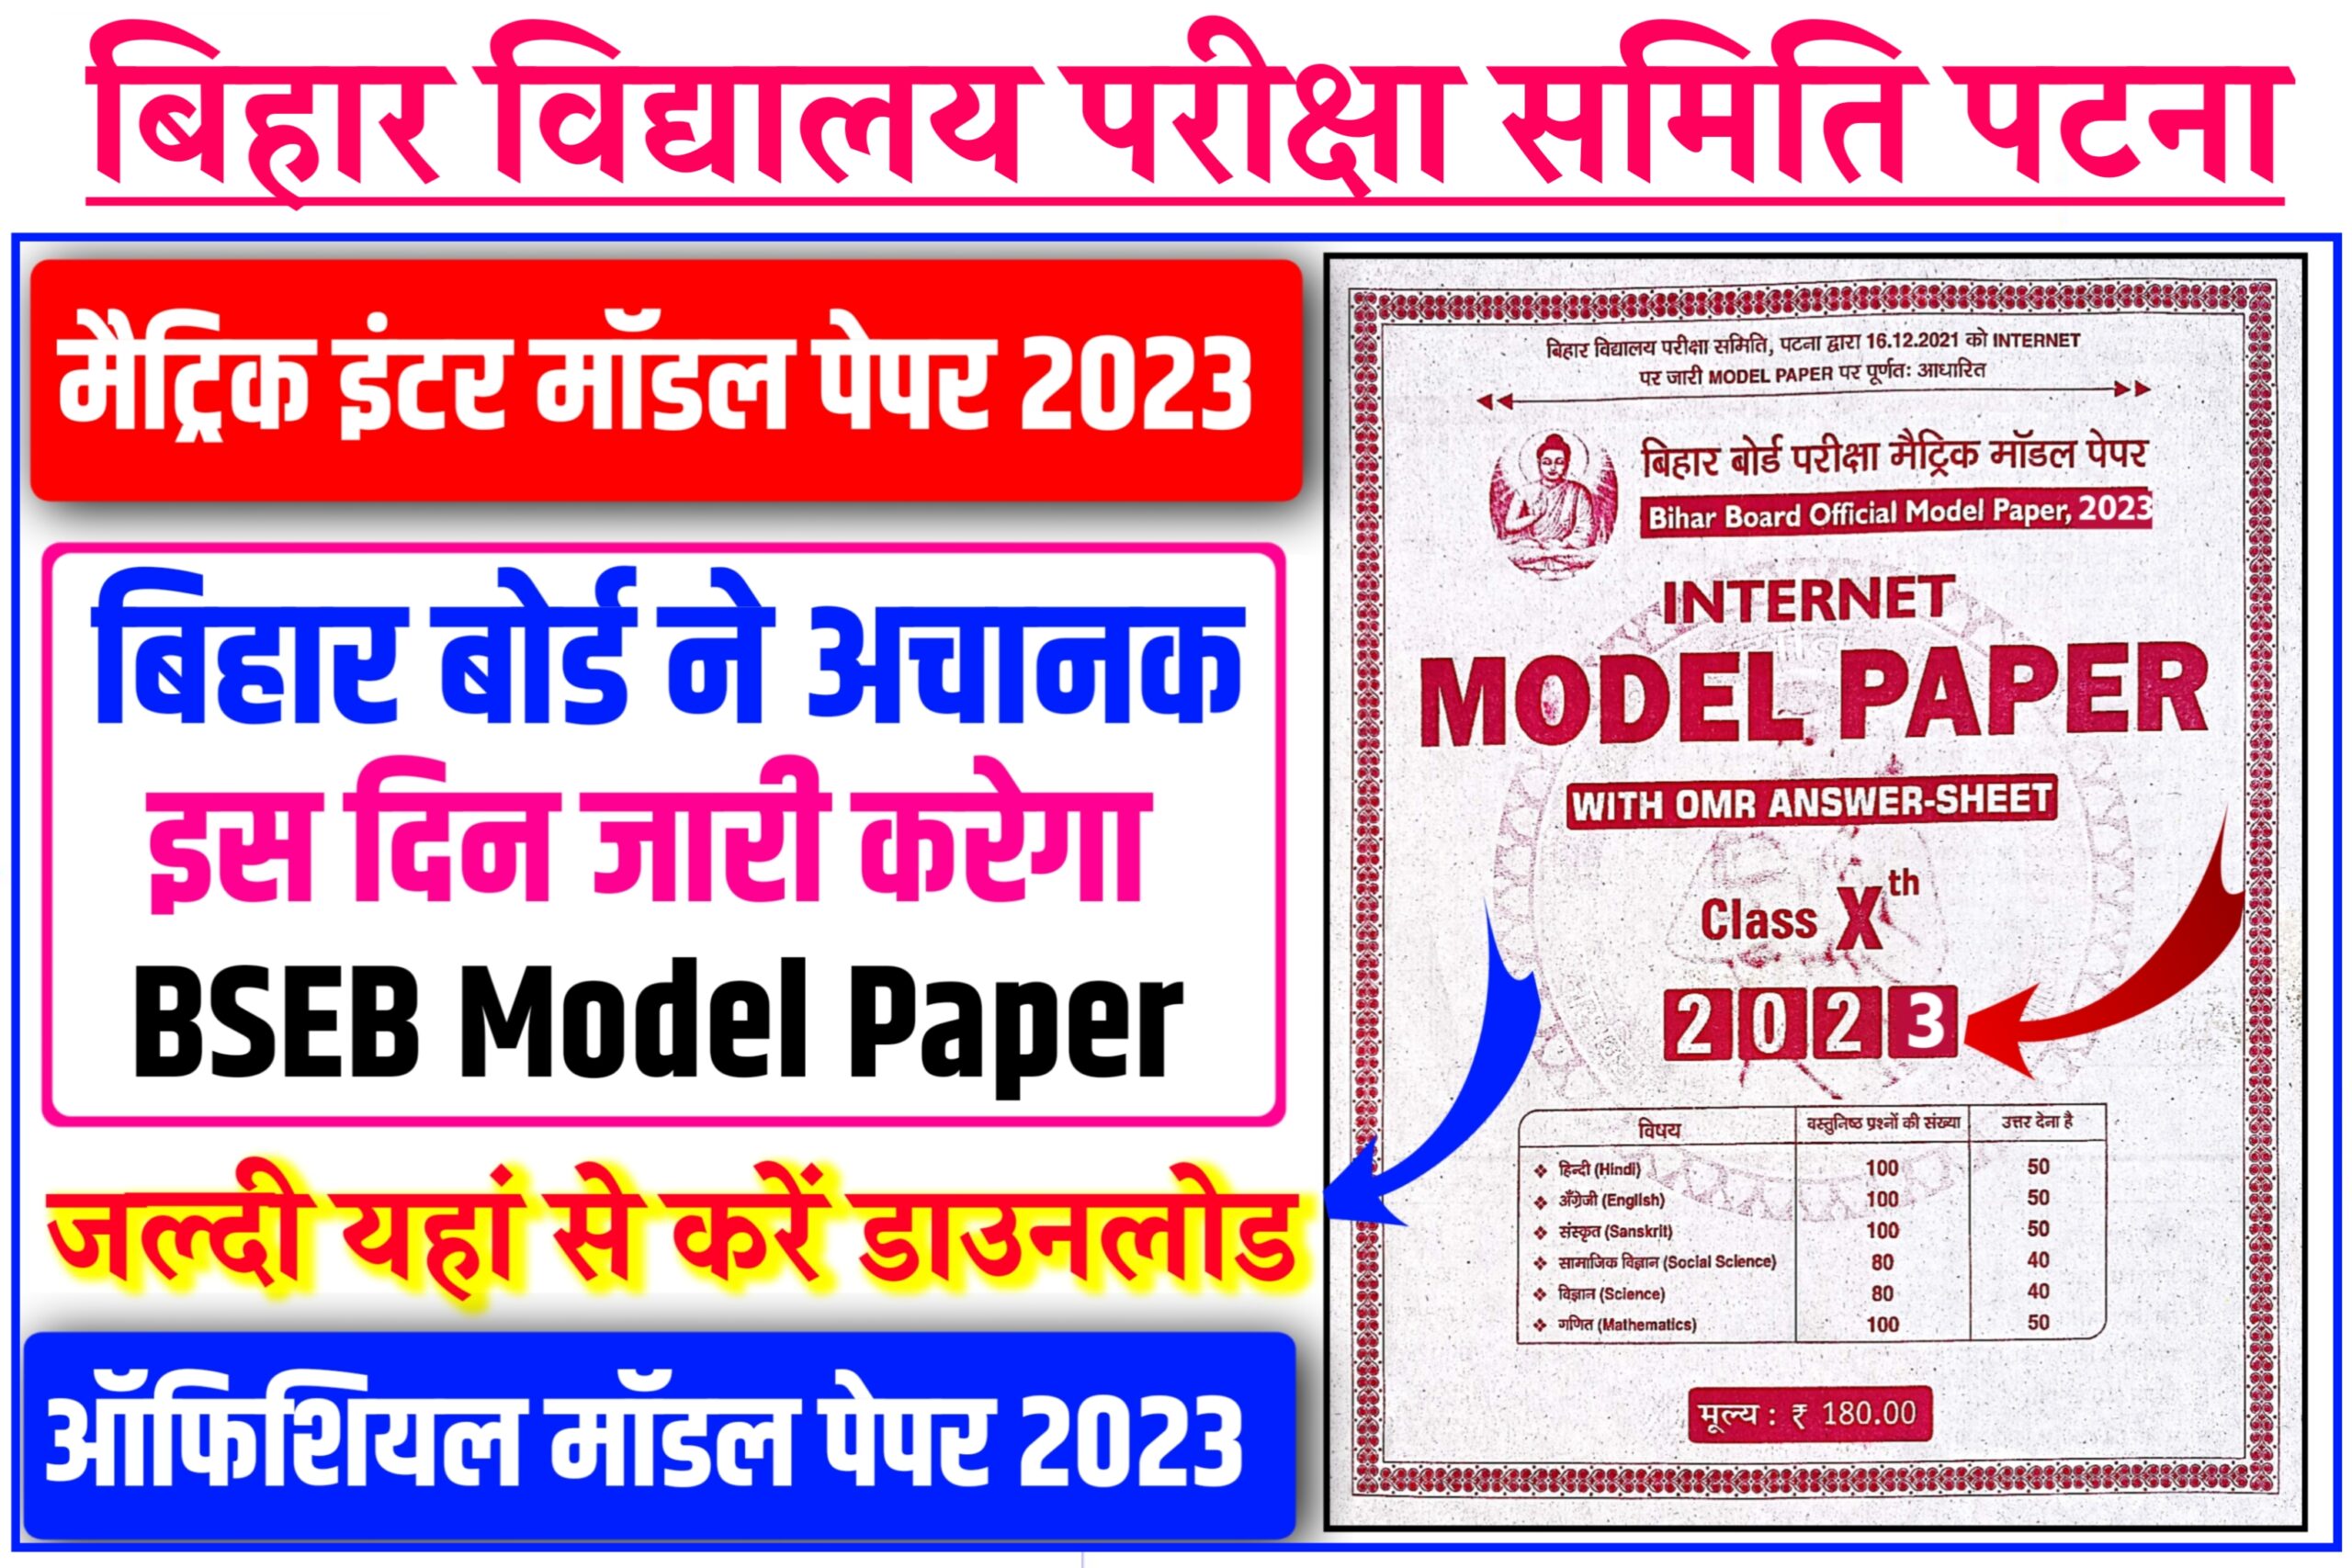 Bihar Board Official Modal Paper 2023